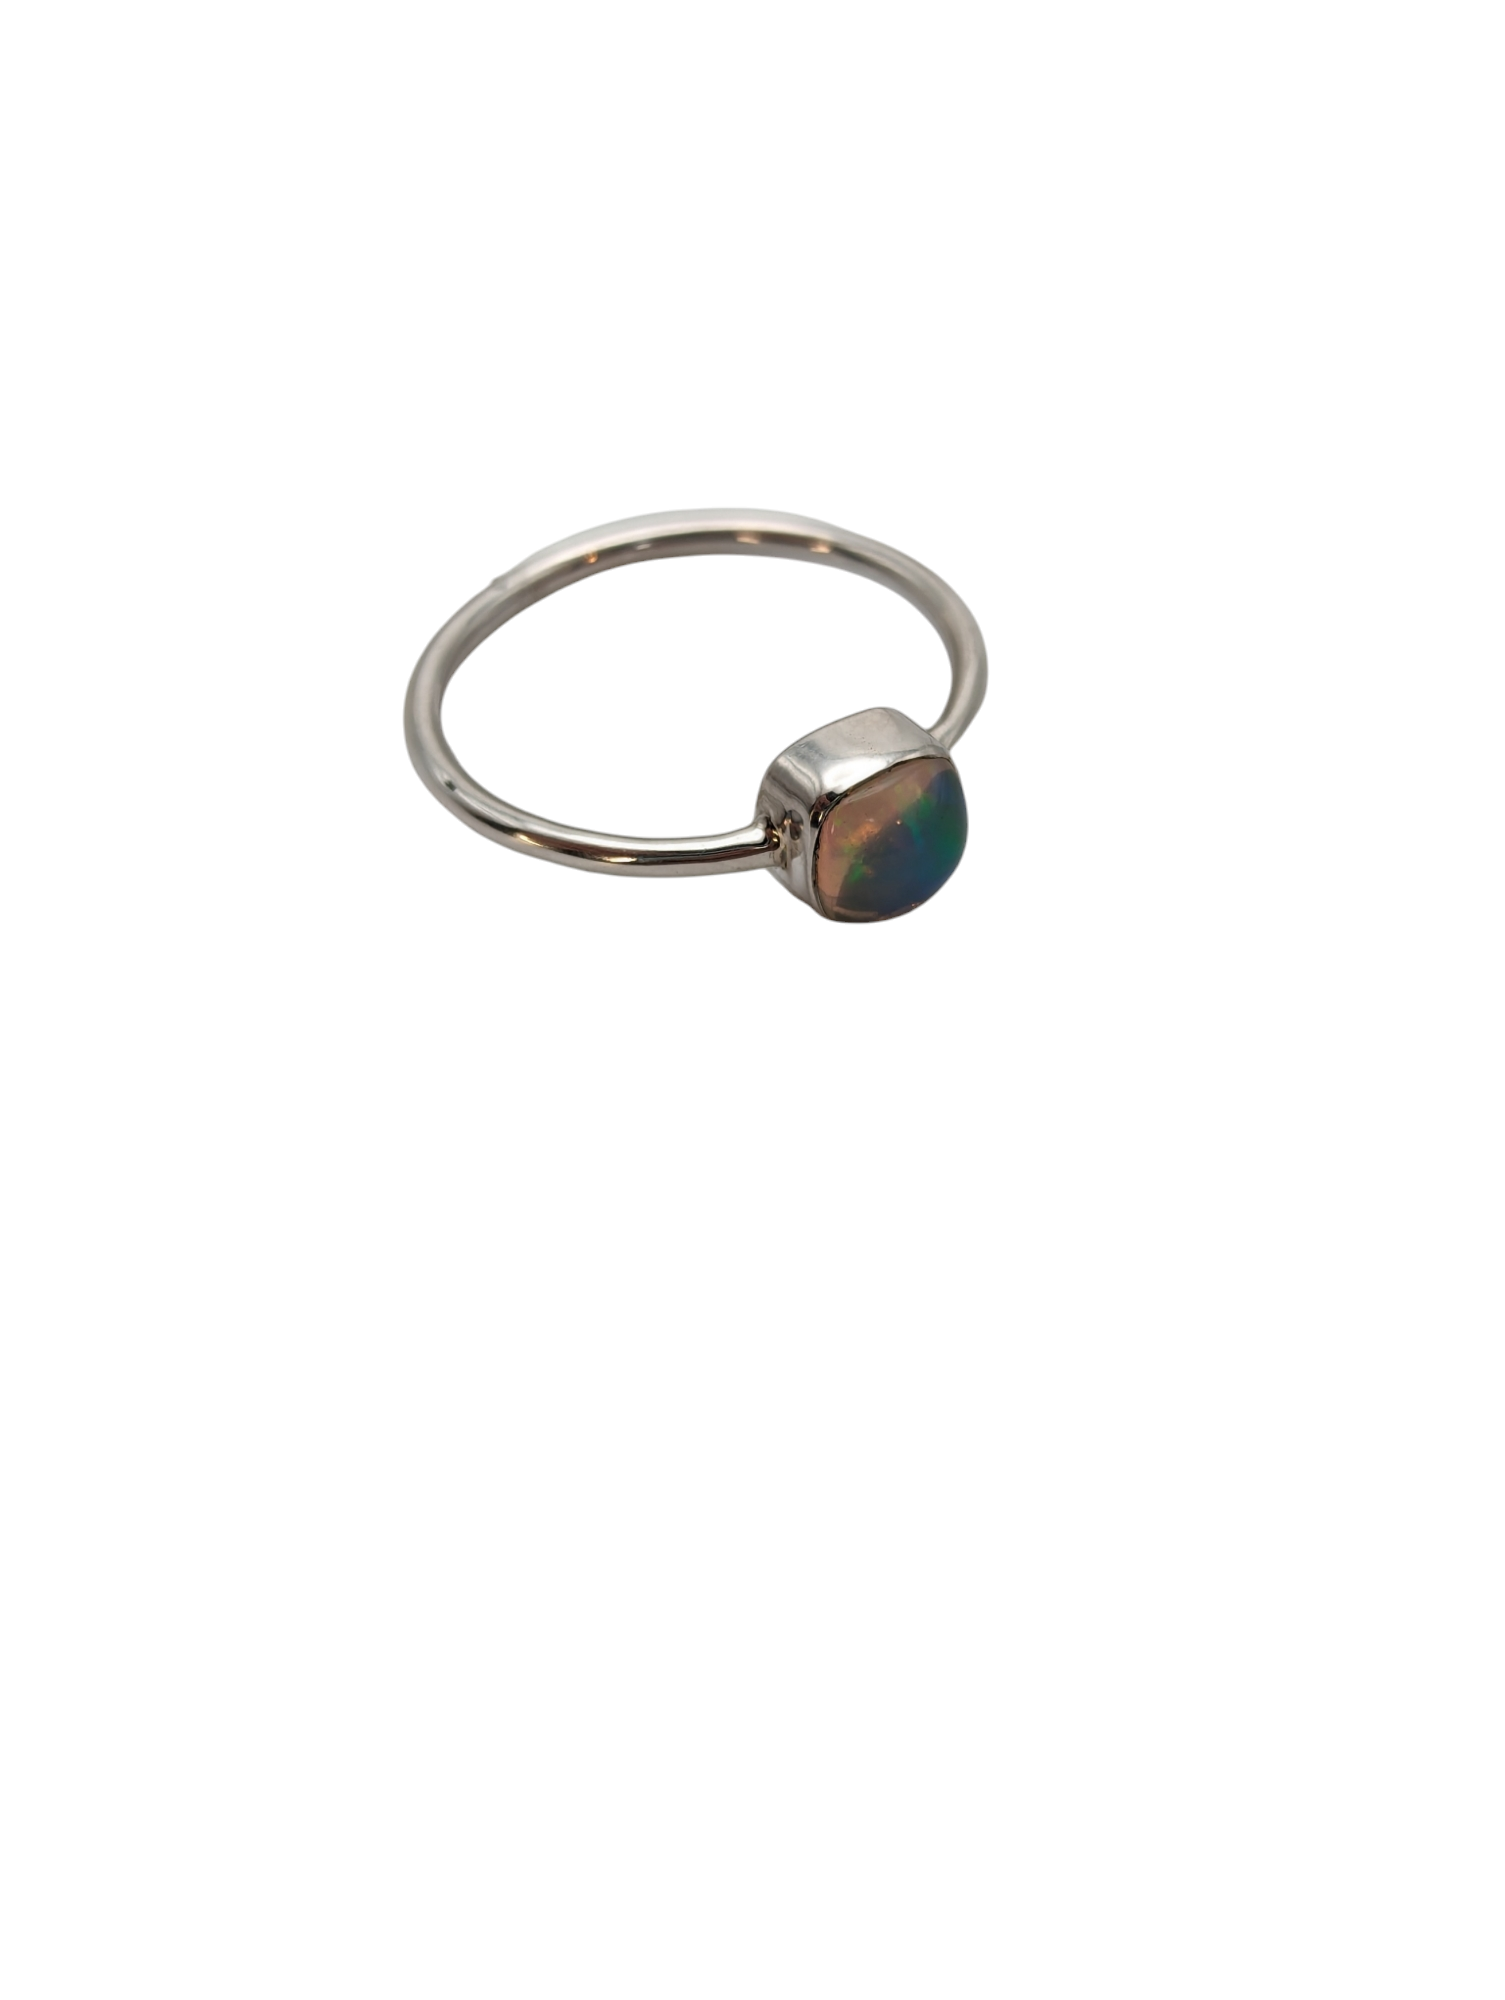 Opal Ring – Size 9 | The Ore Cart Rock Shop